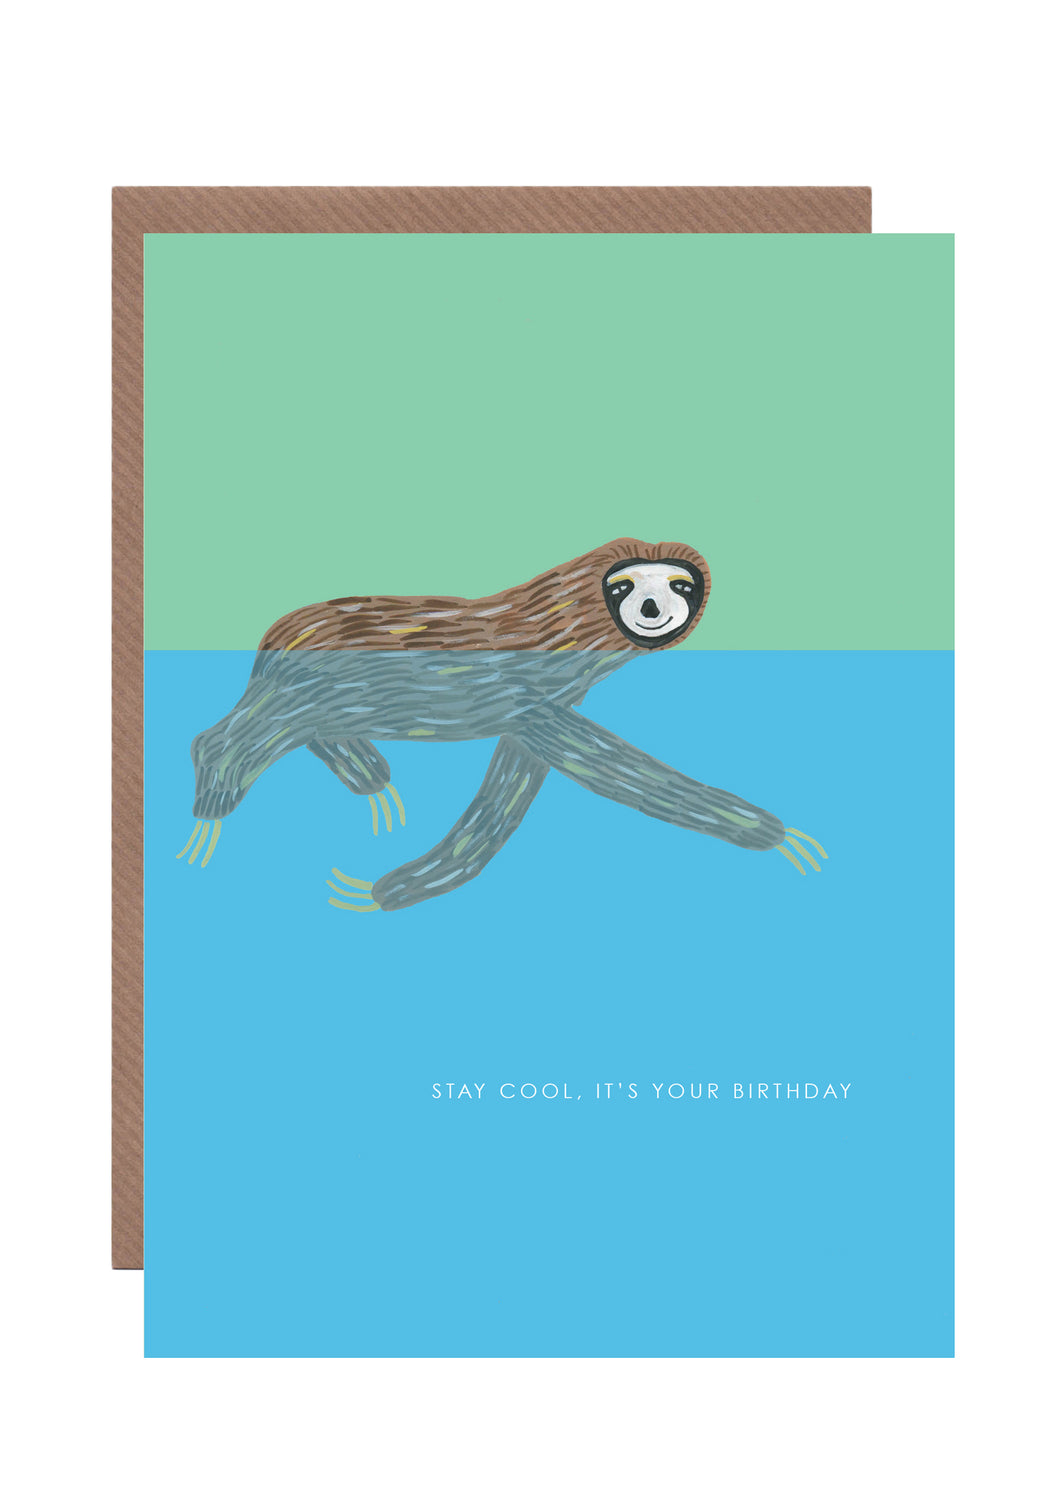 Sloth Swimming birthday card